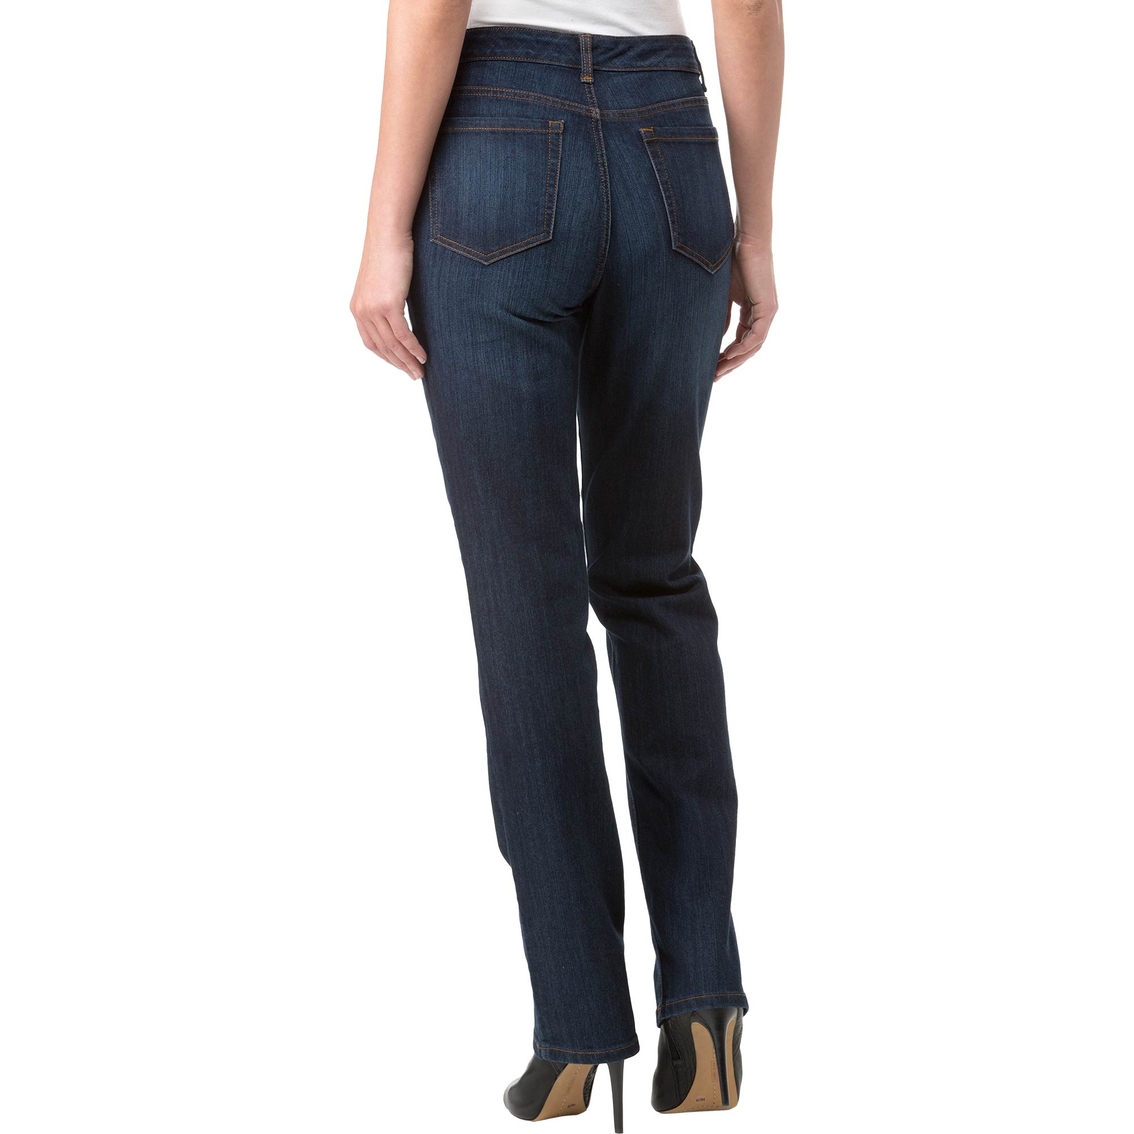 Jones New York Lexington Straight Jeans | Jeans | Clothing ...